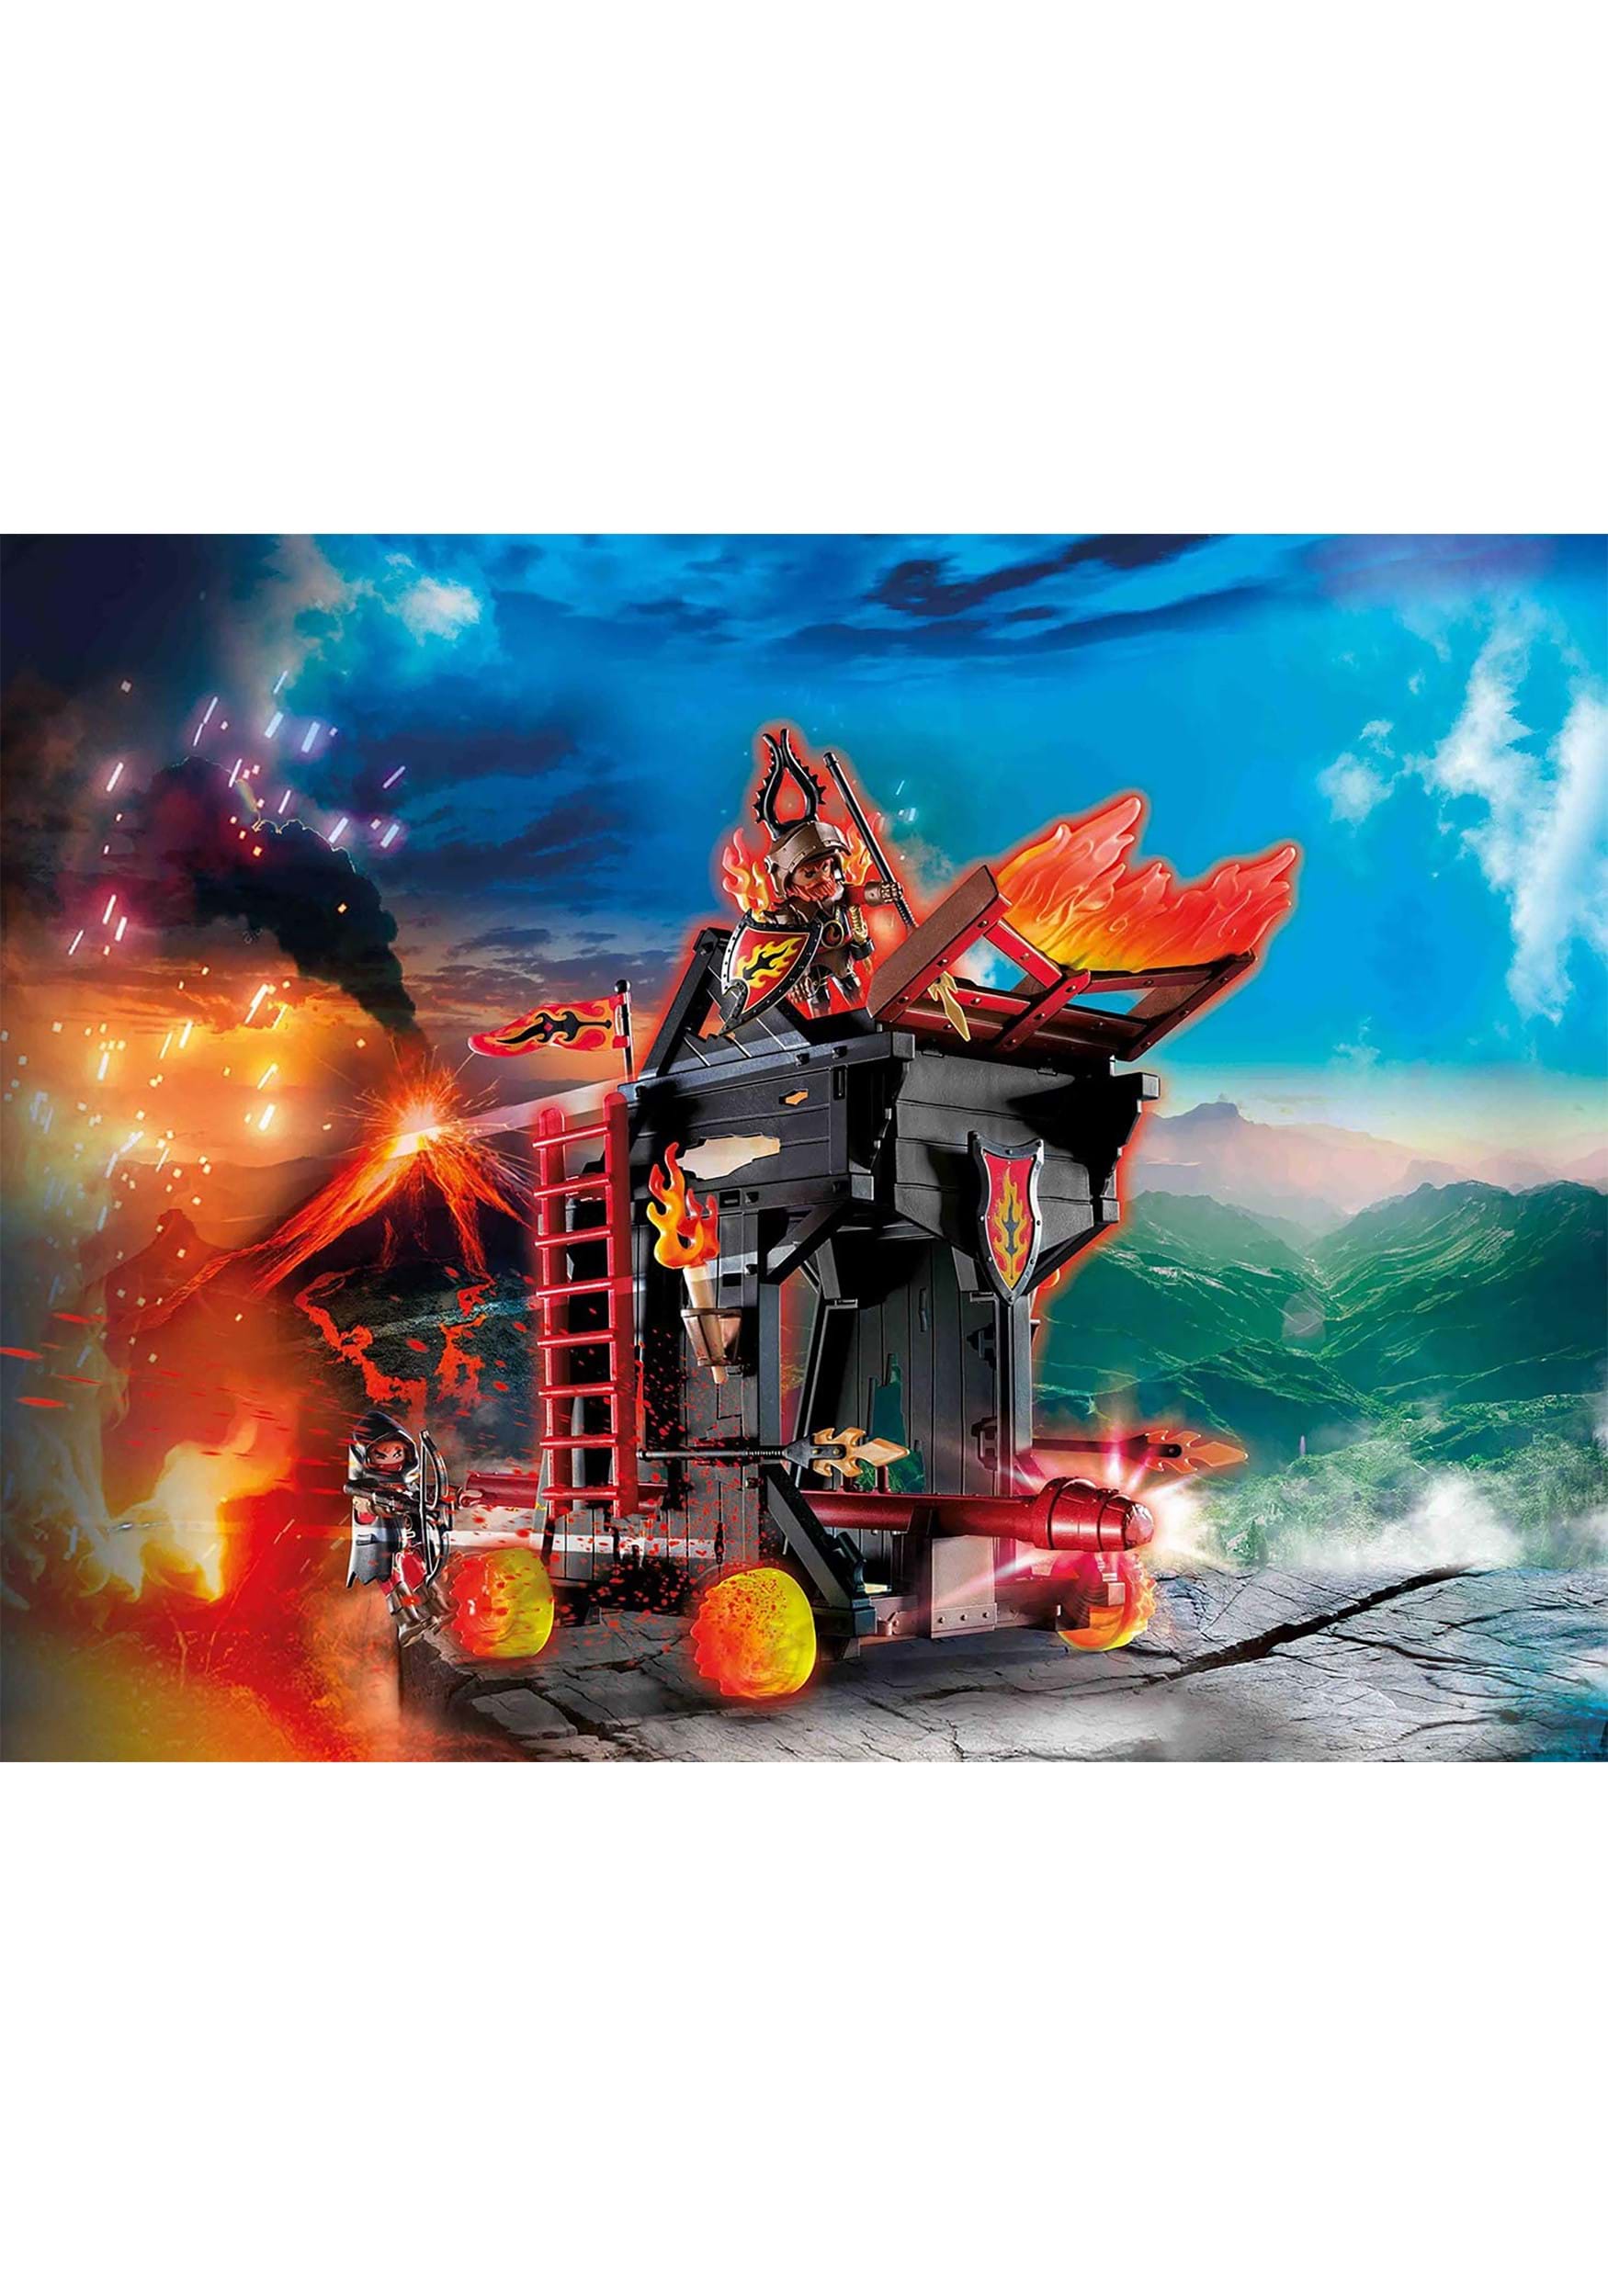 Playmobil Novelmore Burnham Raiders Spirit Of Fire Building Set